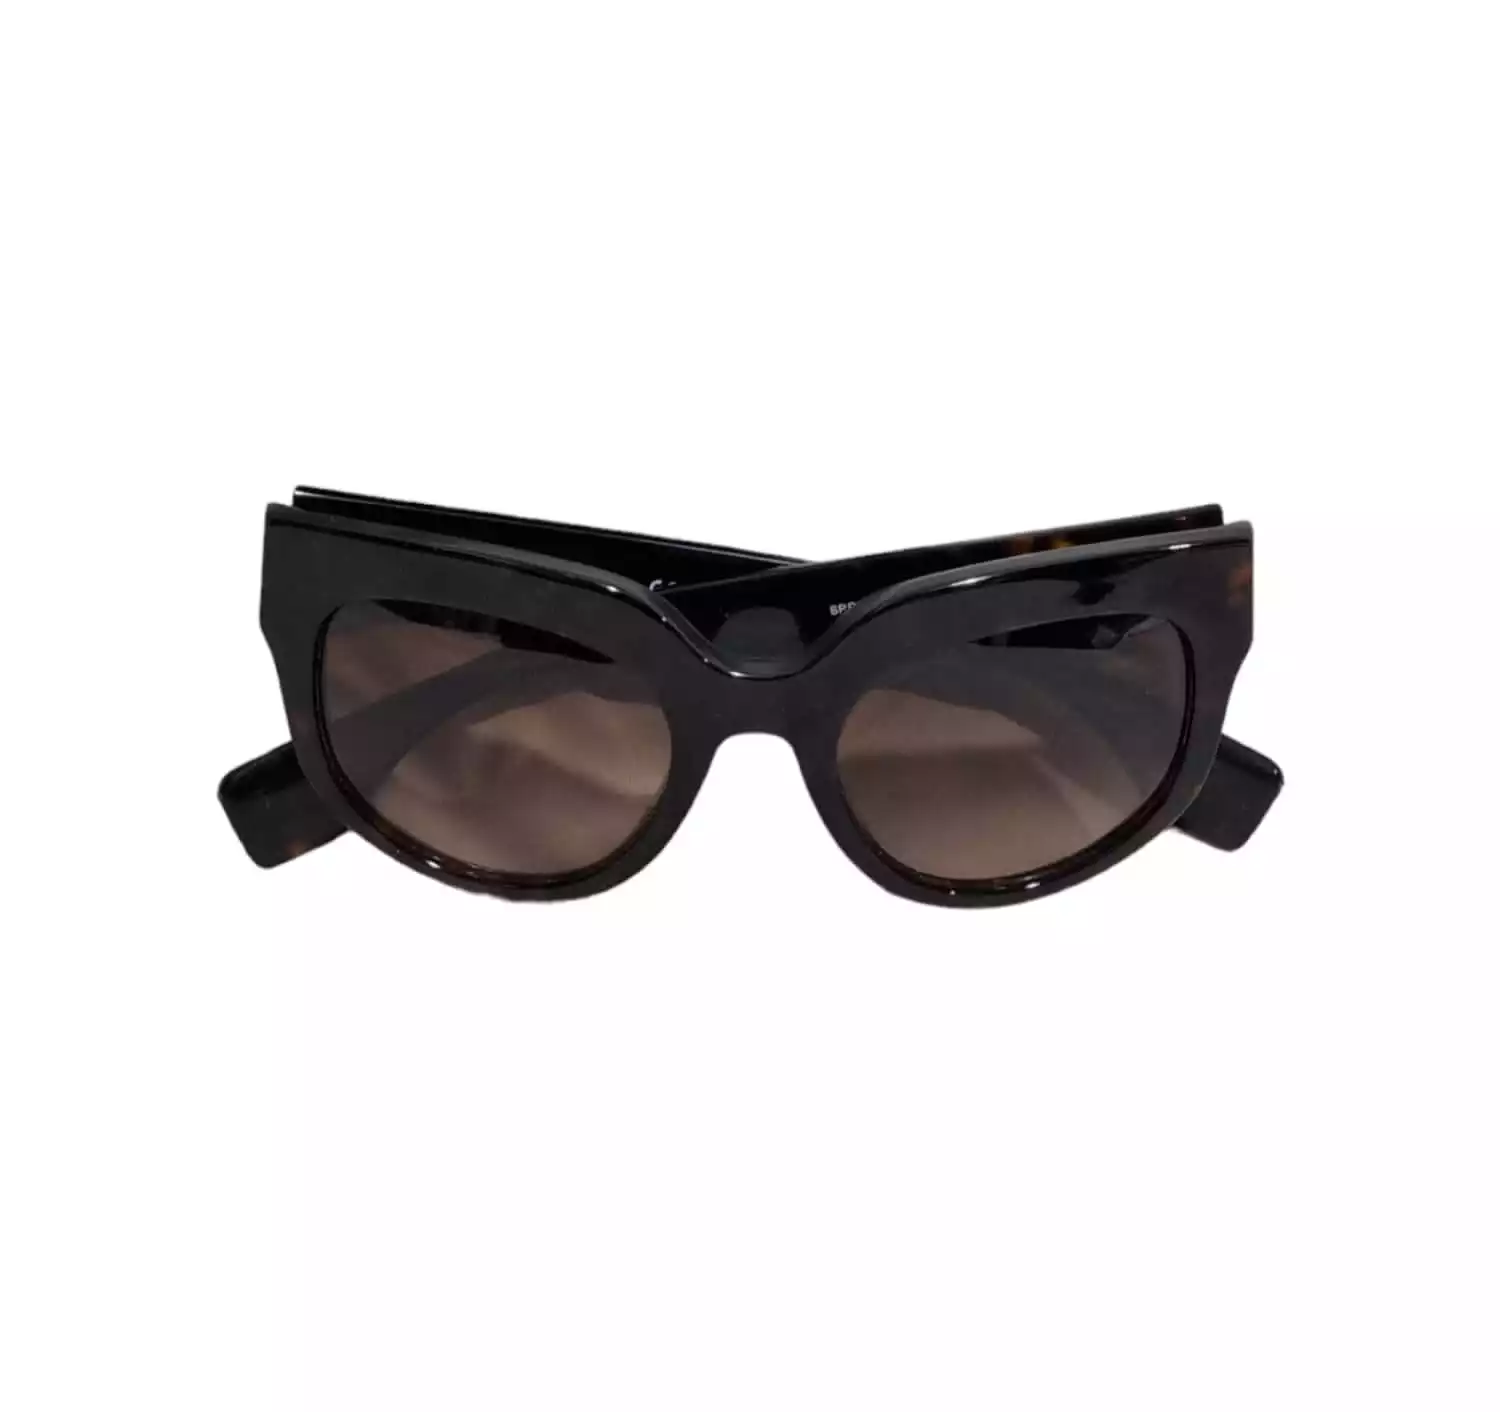 Sunglasses by Prada